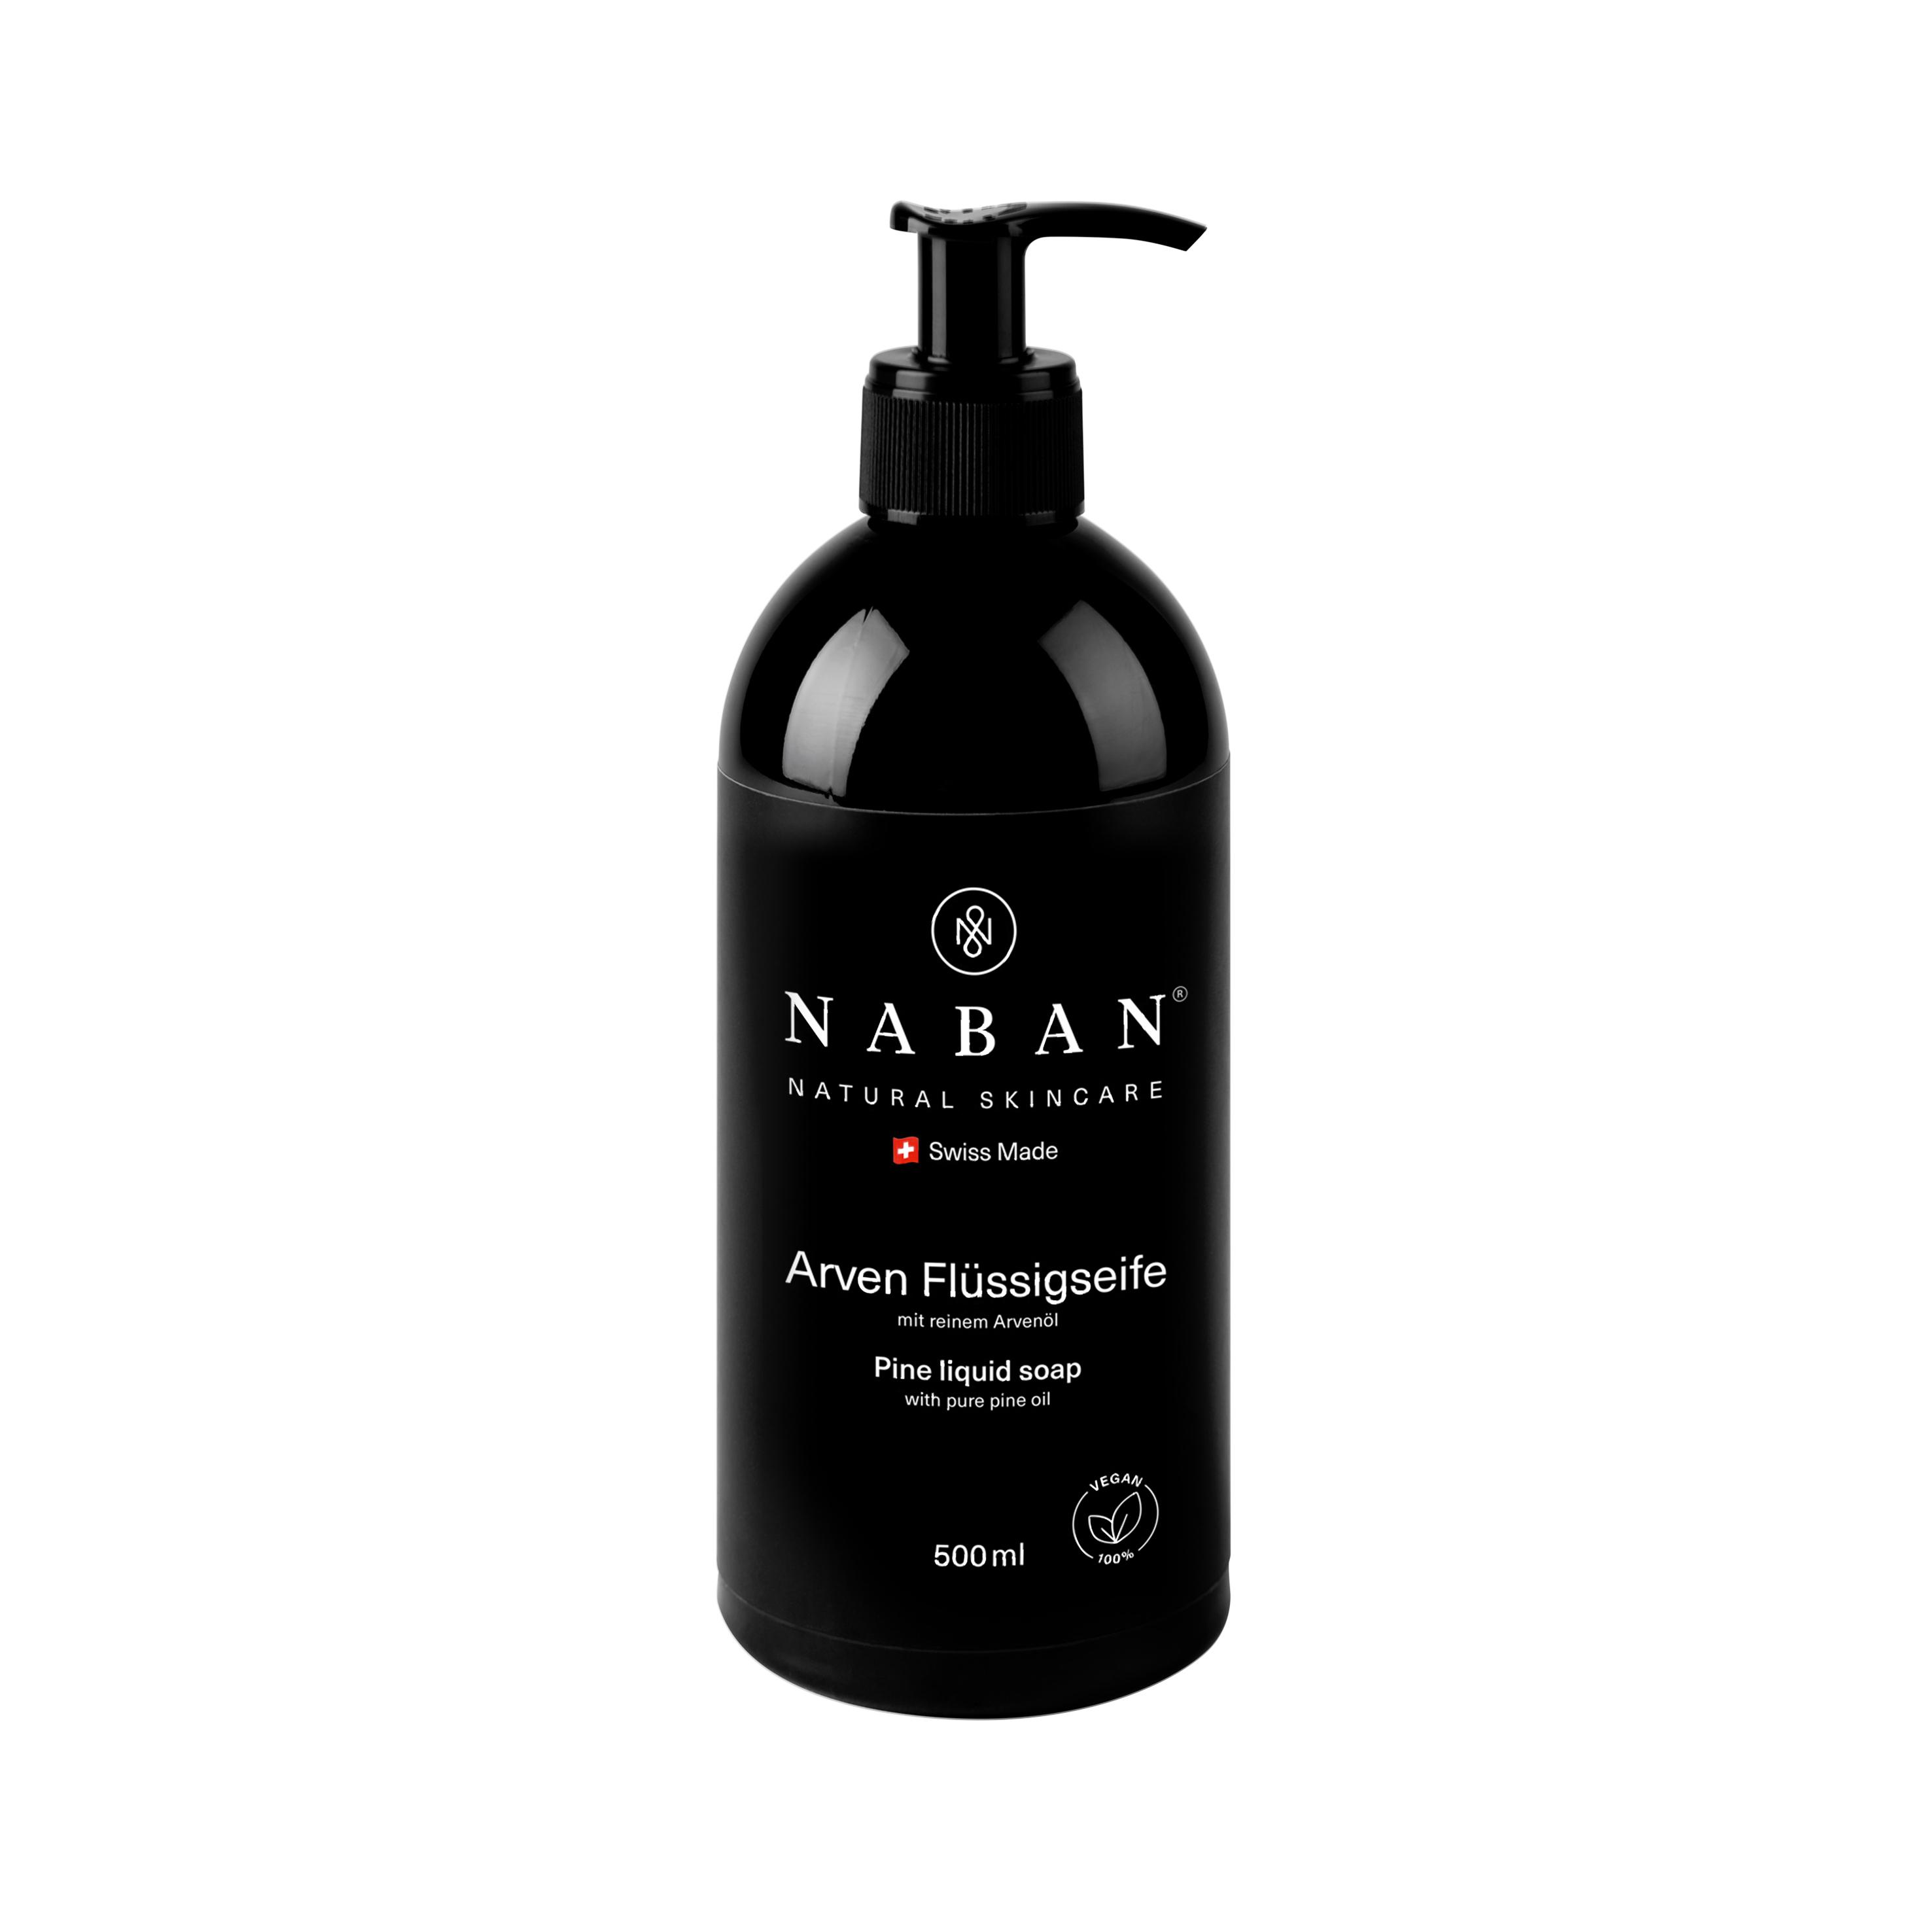 NABAN - Pine liquid soap